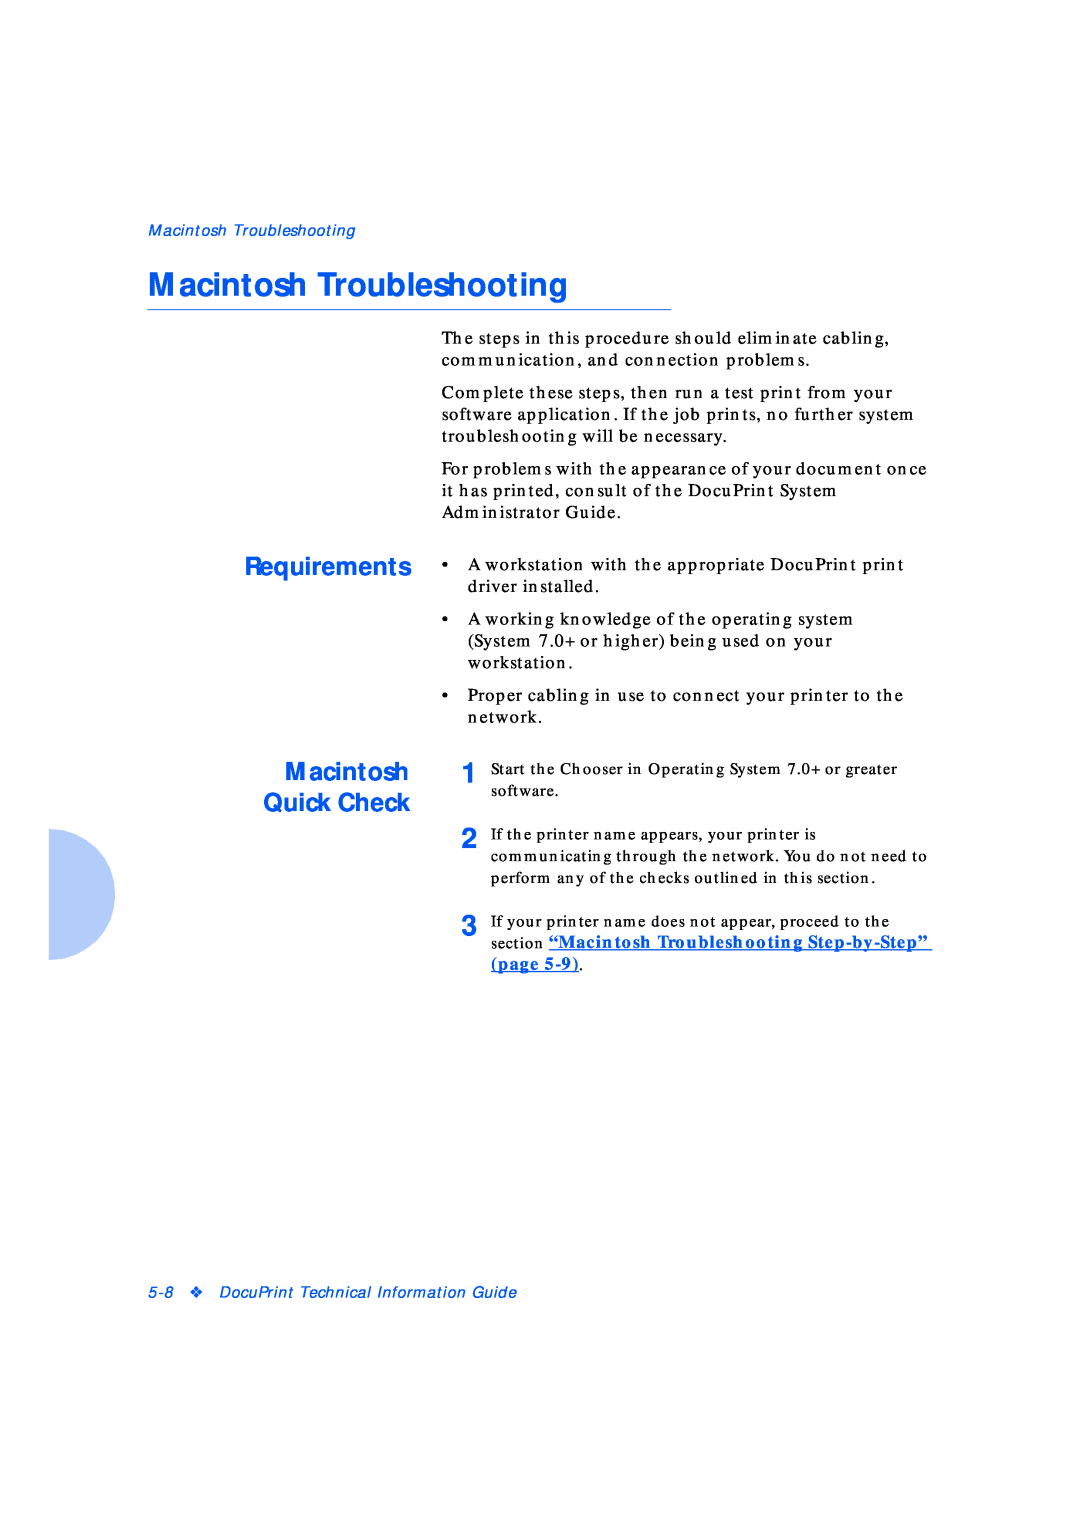 Xerox Network Laser Printers manual Macintosh Troubleshooting, Macintosh Quick Check, Requirements 